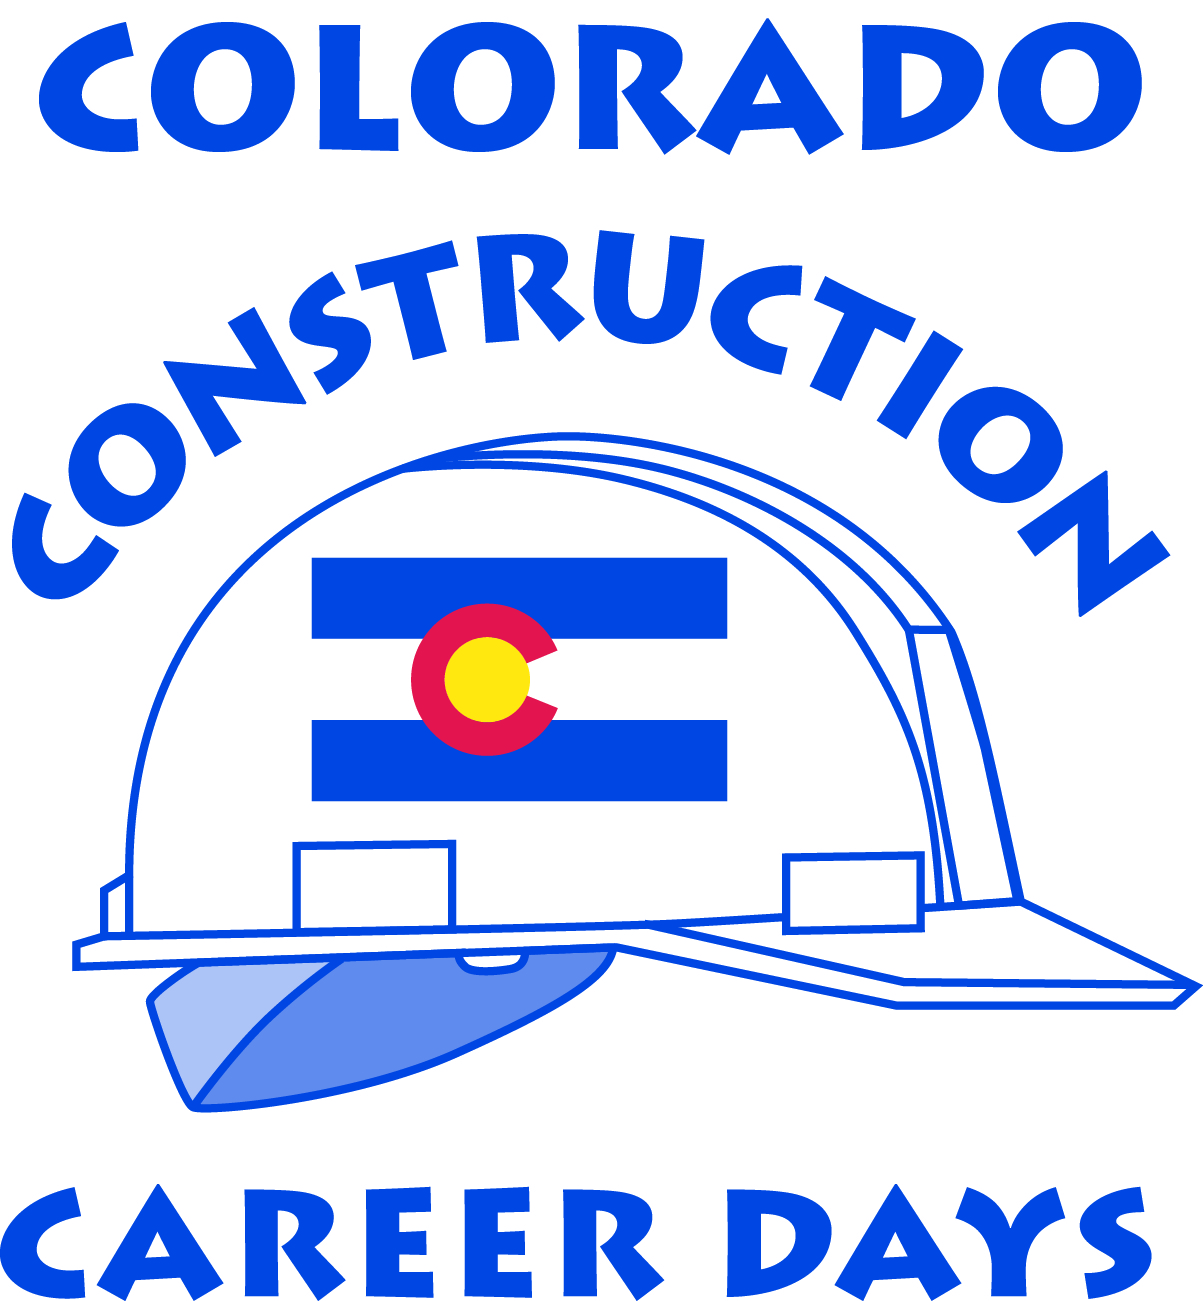 Click to access Colorado Construction in Education website